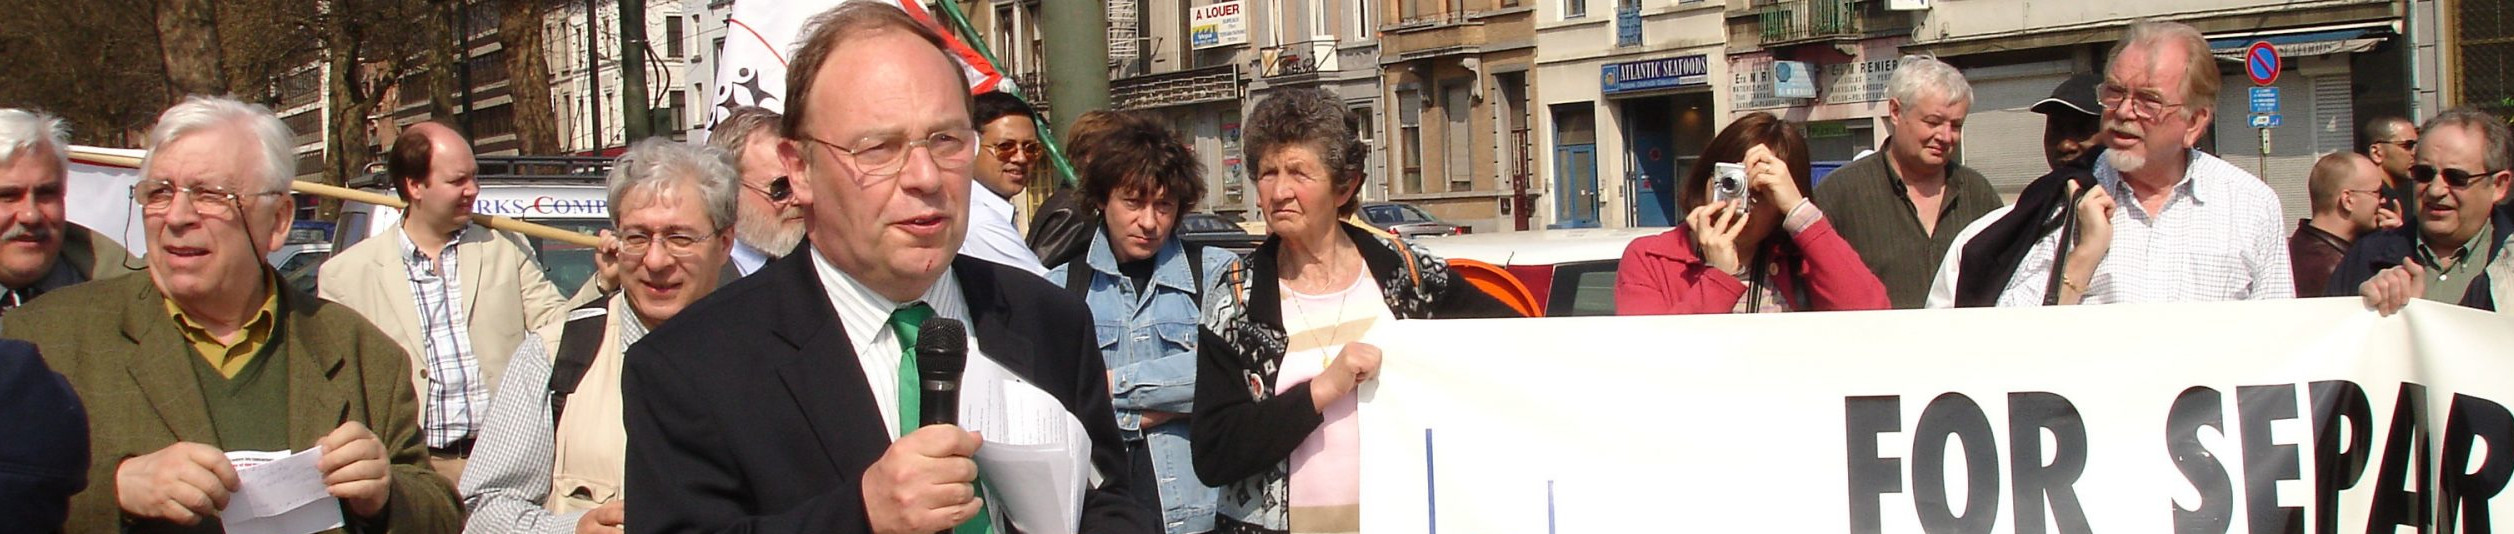 Manifestation internationale Bruxelles (2005)